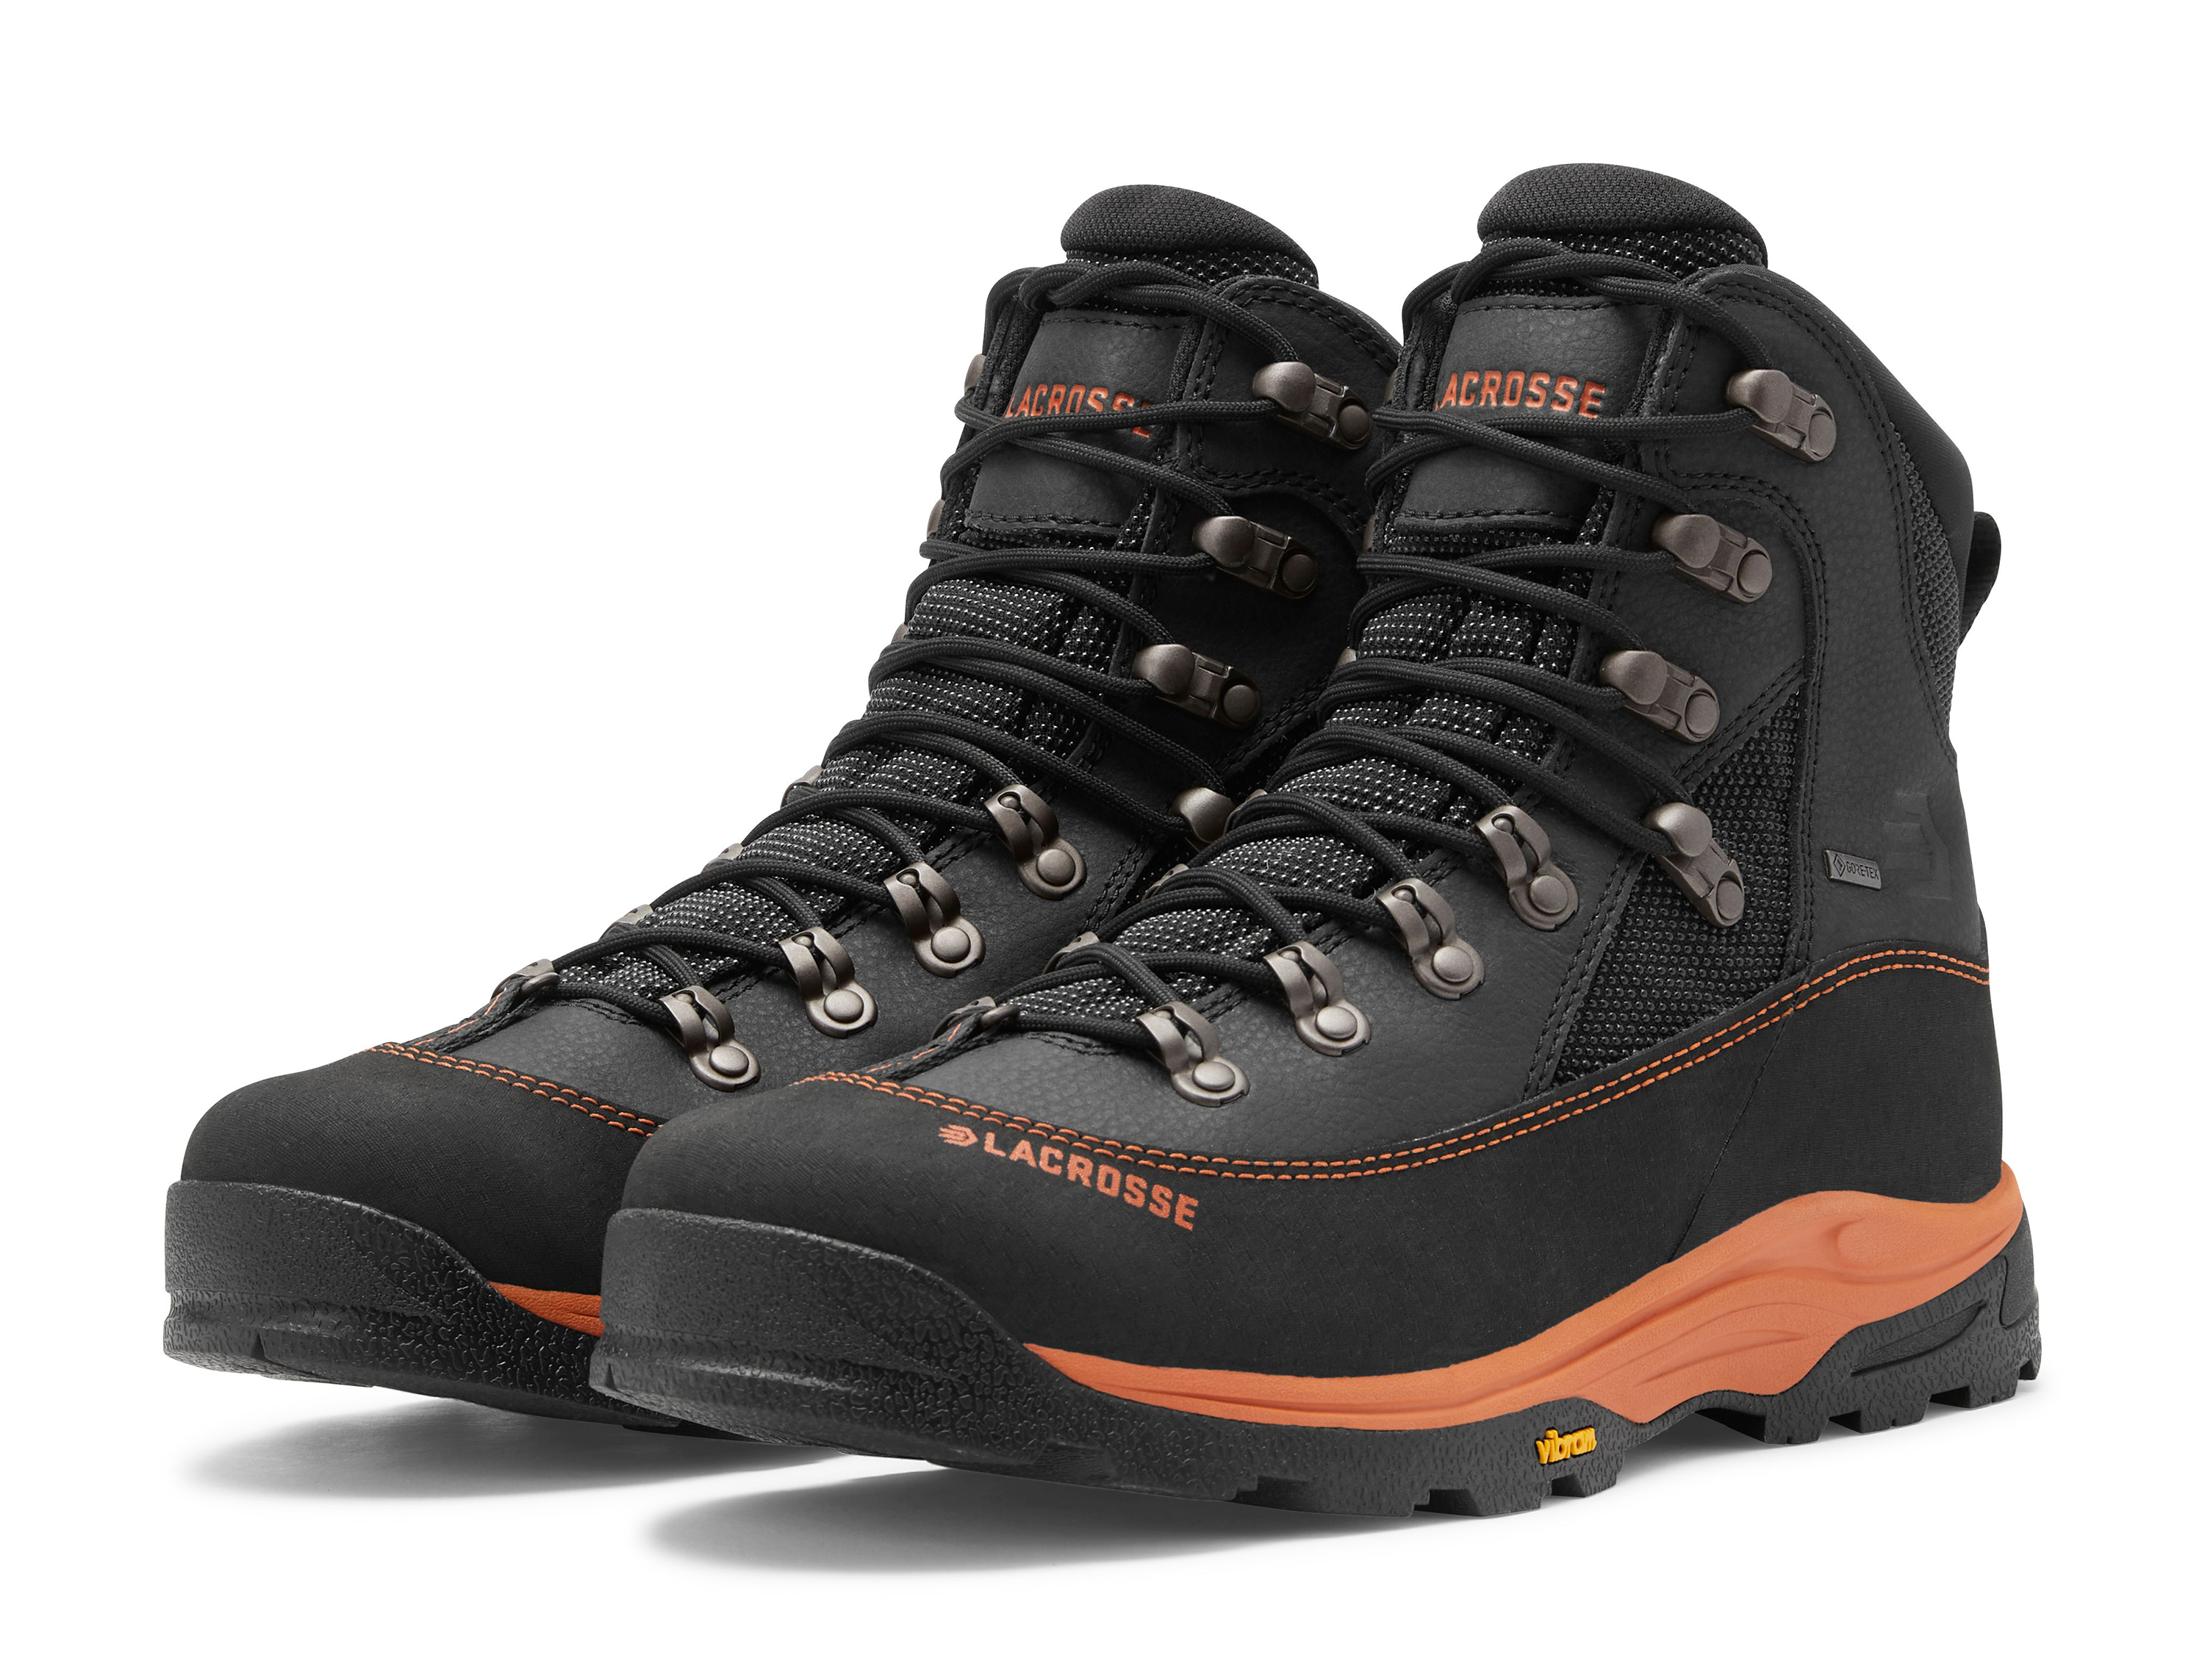 LaCrosse Ursa MS GORE-TEX Hunting Boots for Men - Gunmetal/Orange - 7M